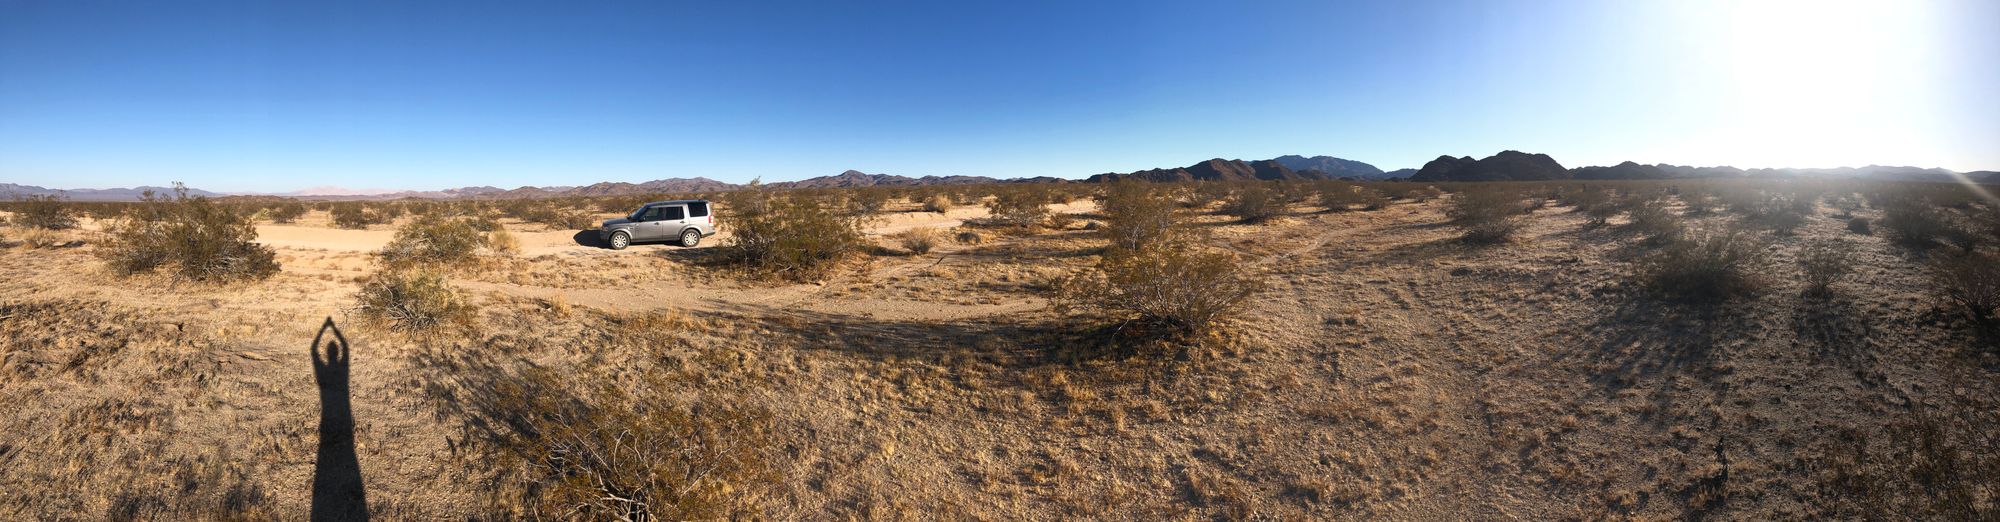 1800 mile 5 desert solo overland trip (SoCal)